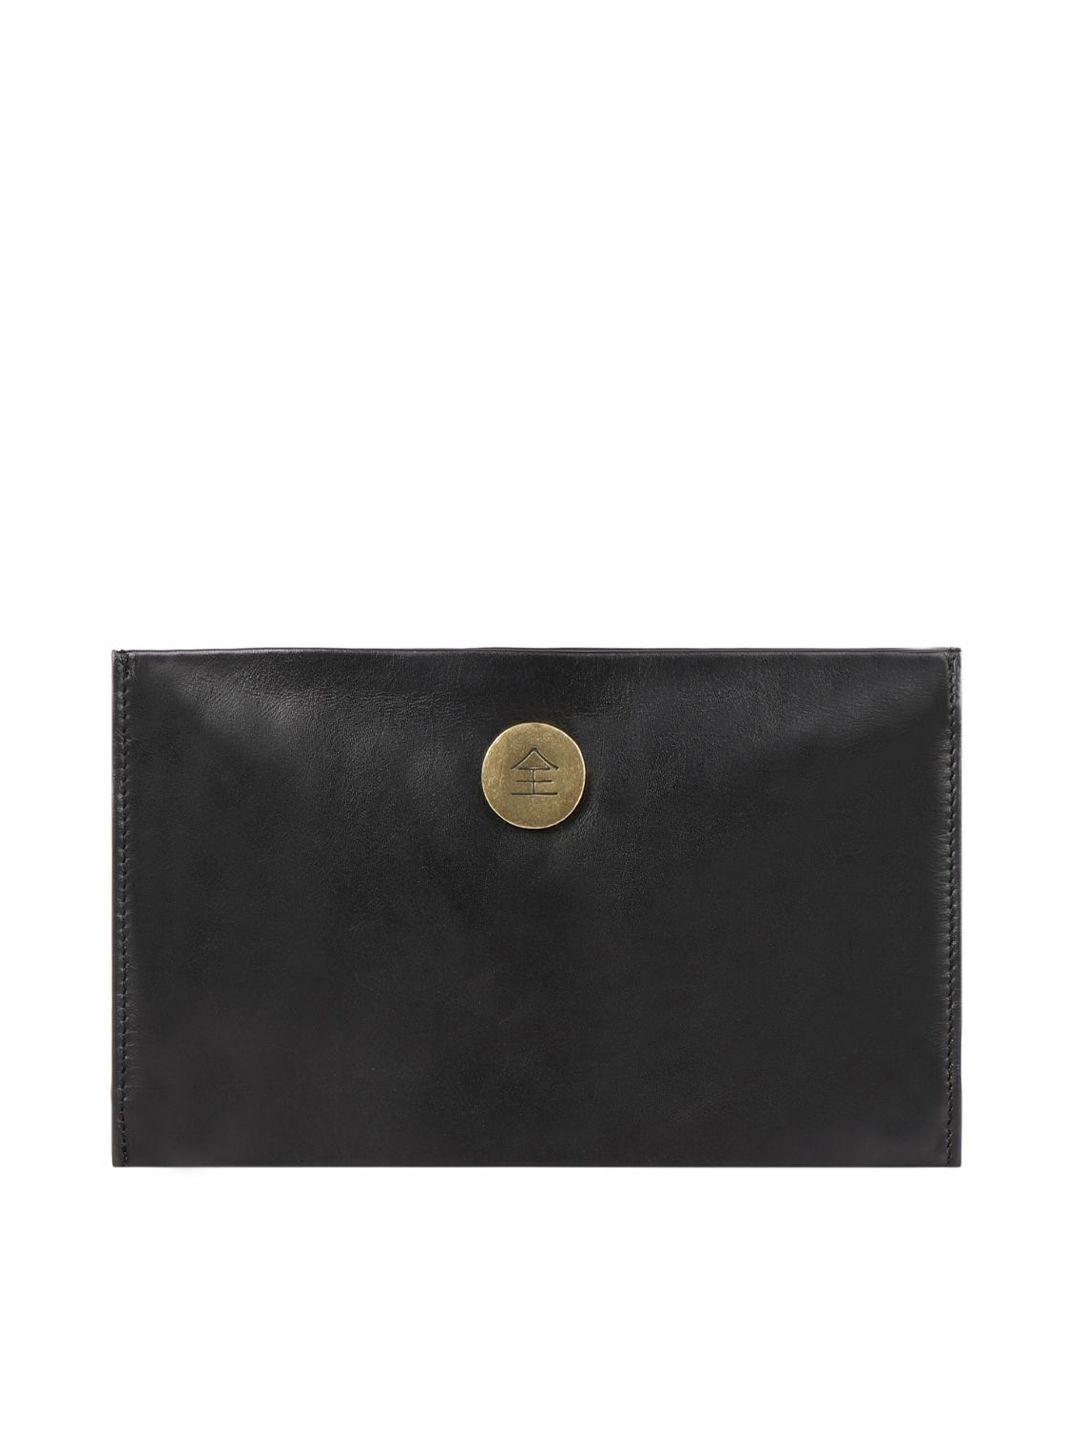 hidesign women black leather zip around wallet